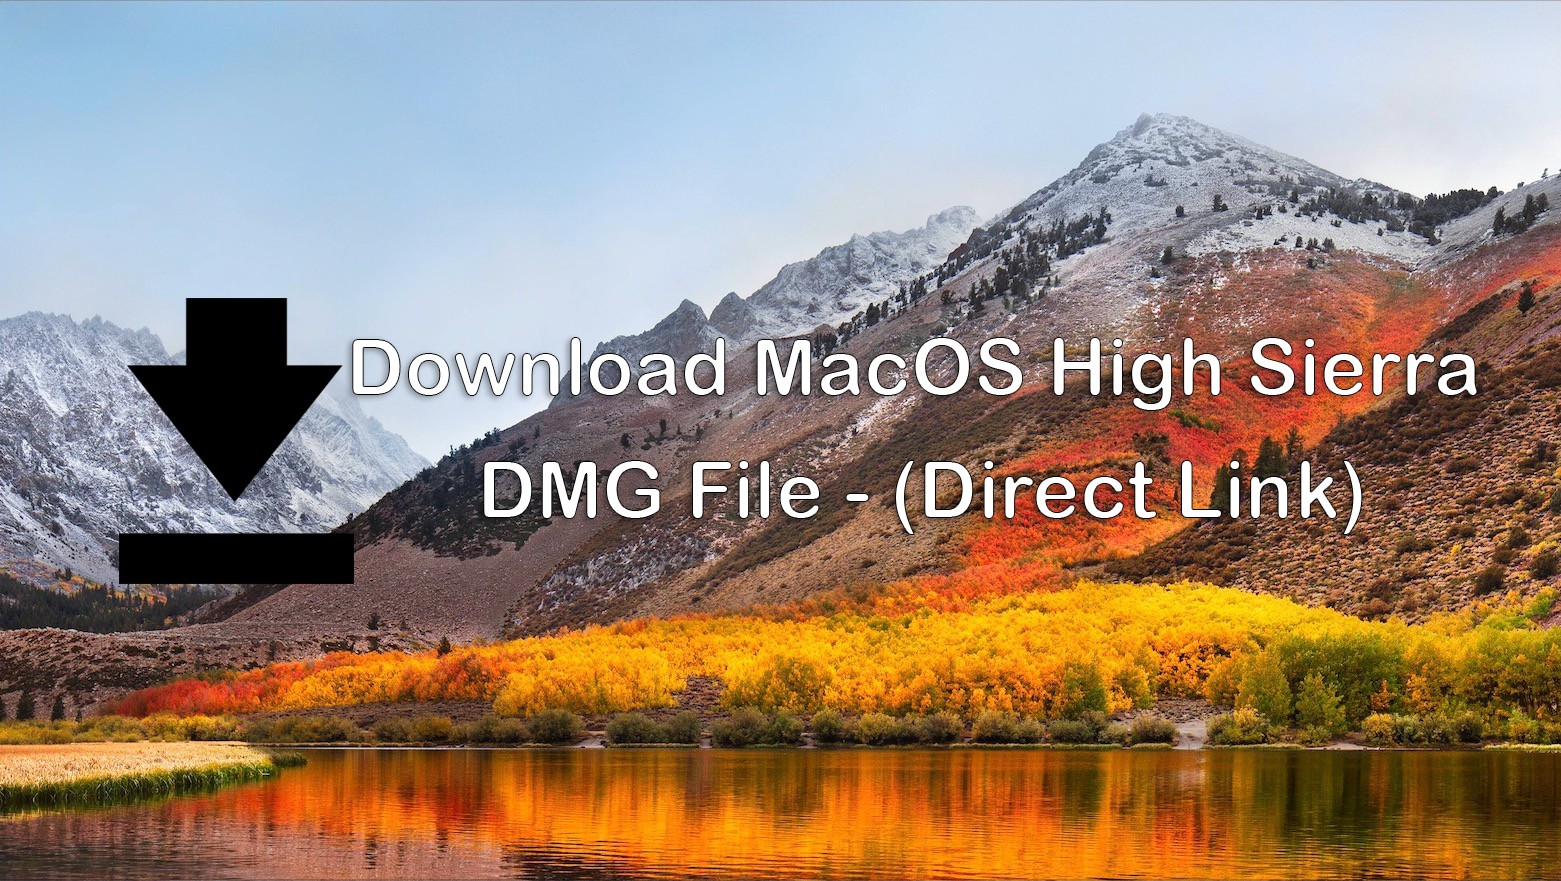 download link for mac os high sierra